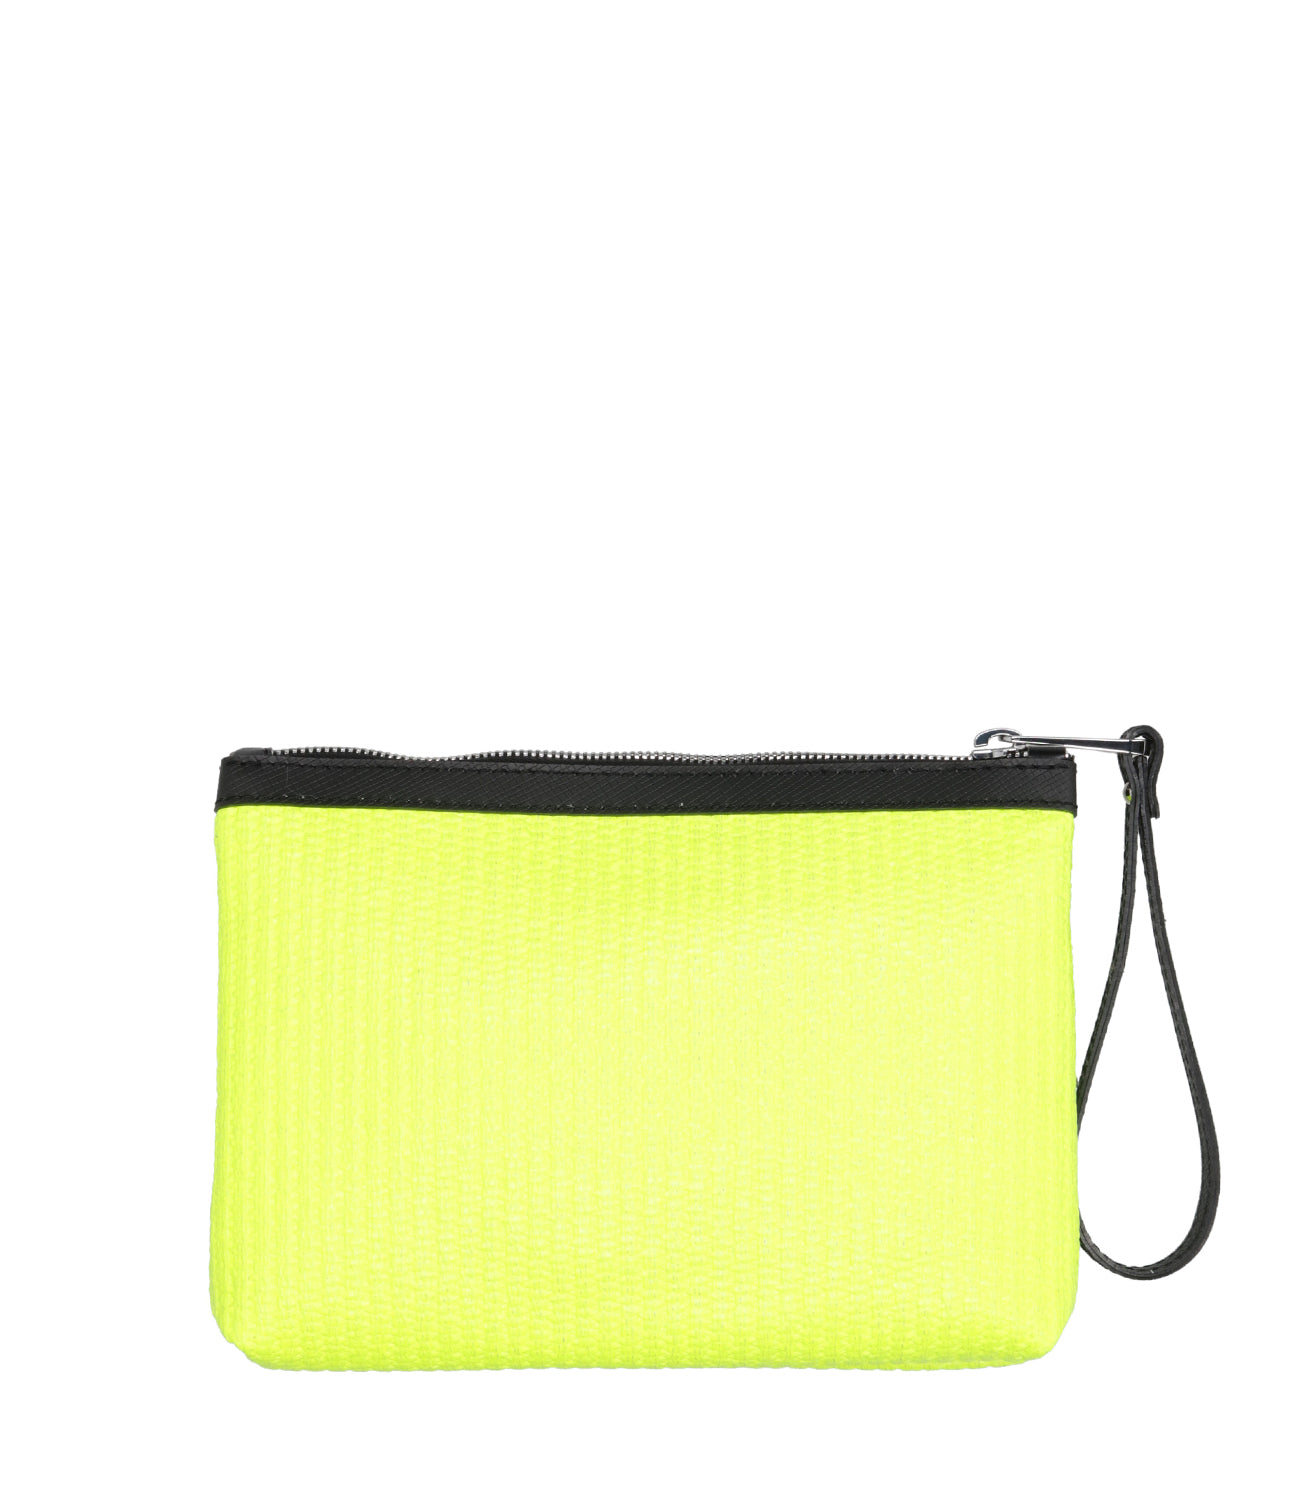 Gum design | Fluo yellow clutch bag